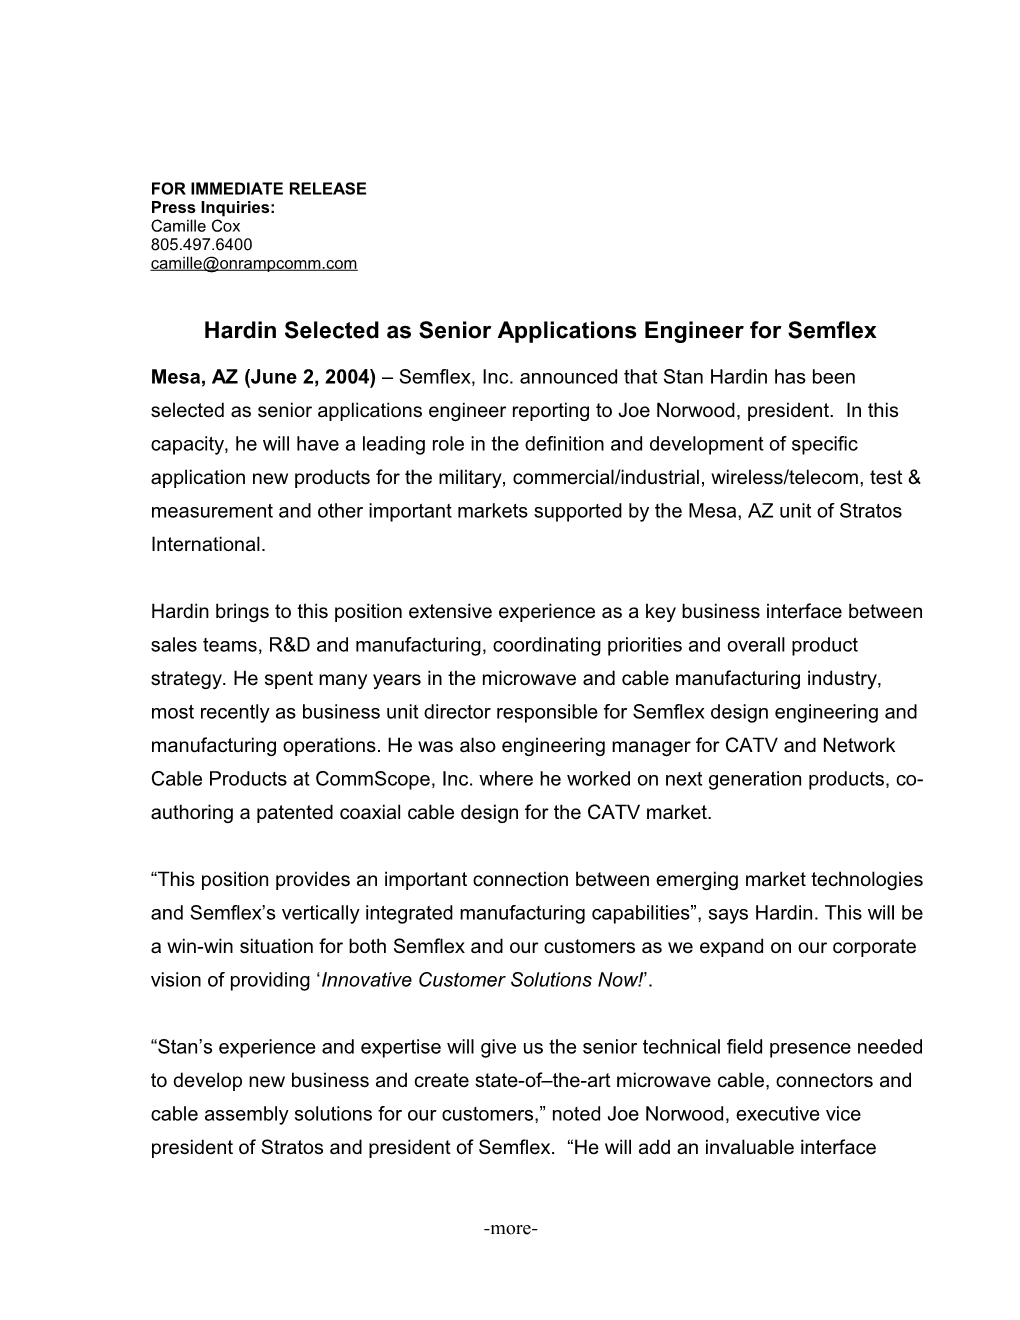 Hardin Selected As Senior Applications Engineer for Semflex